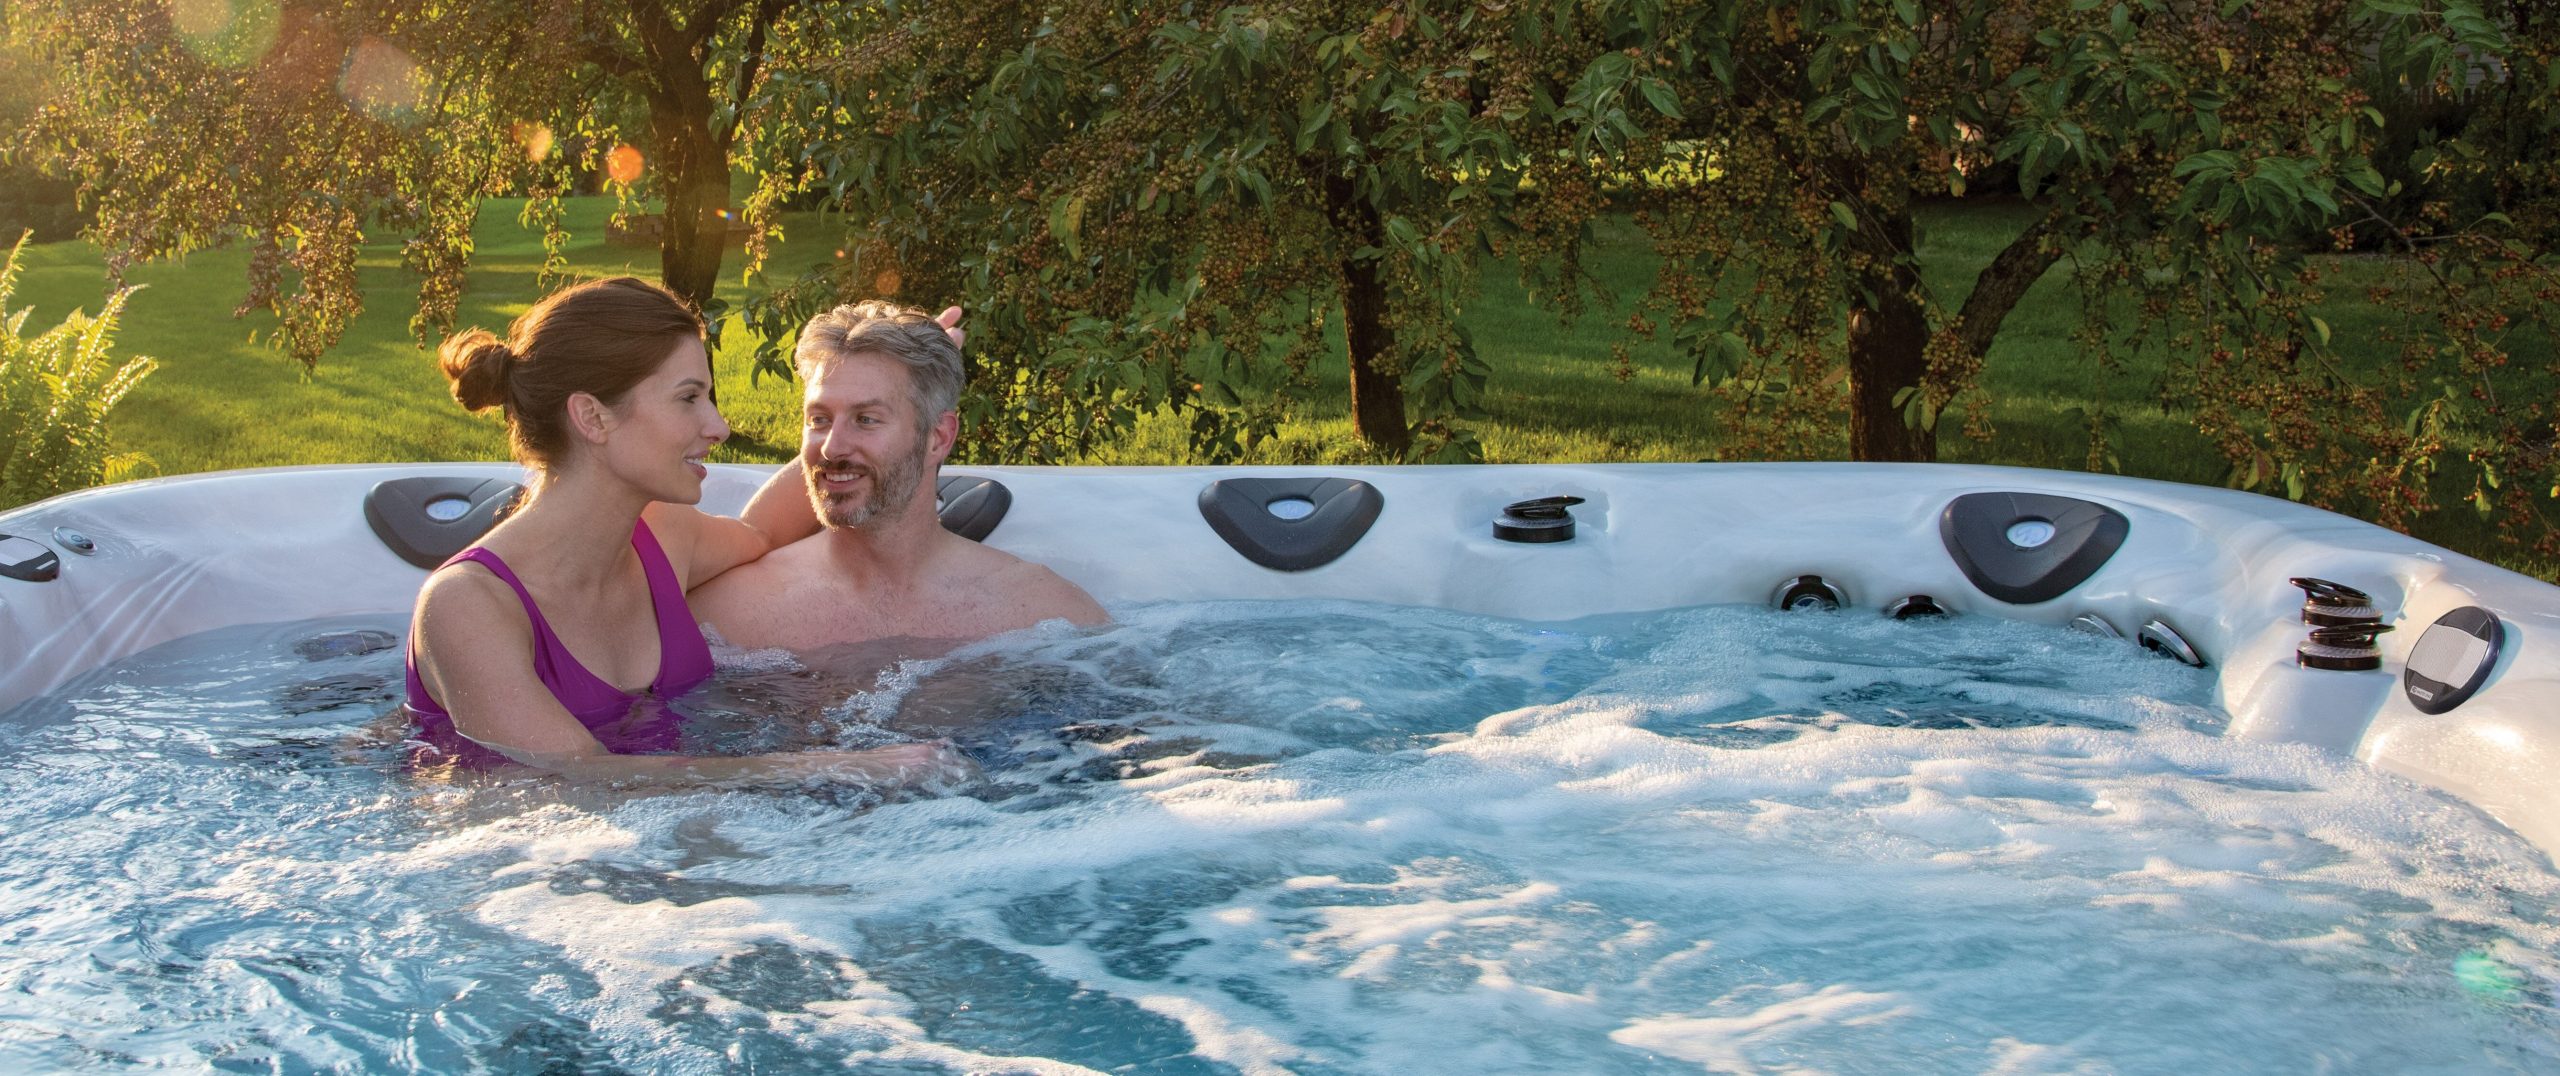 The Basic Anatomy Of A Hot Tub Pool Tech Plus